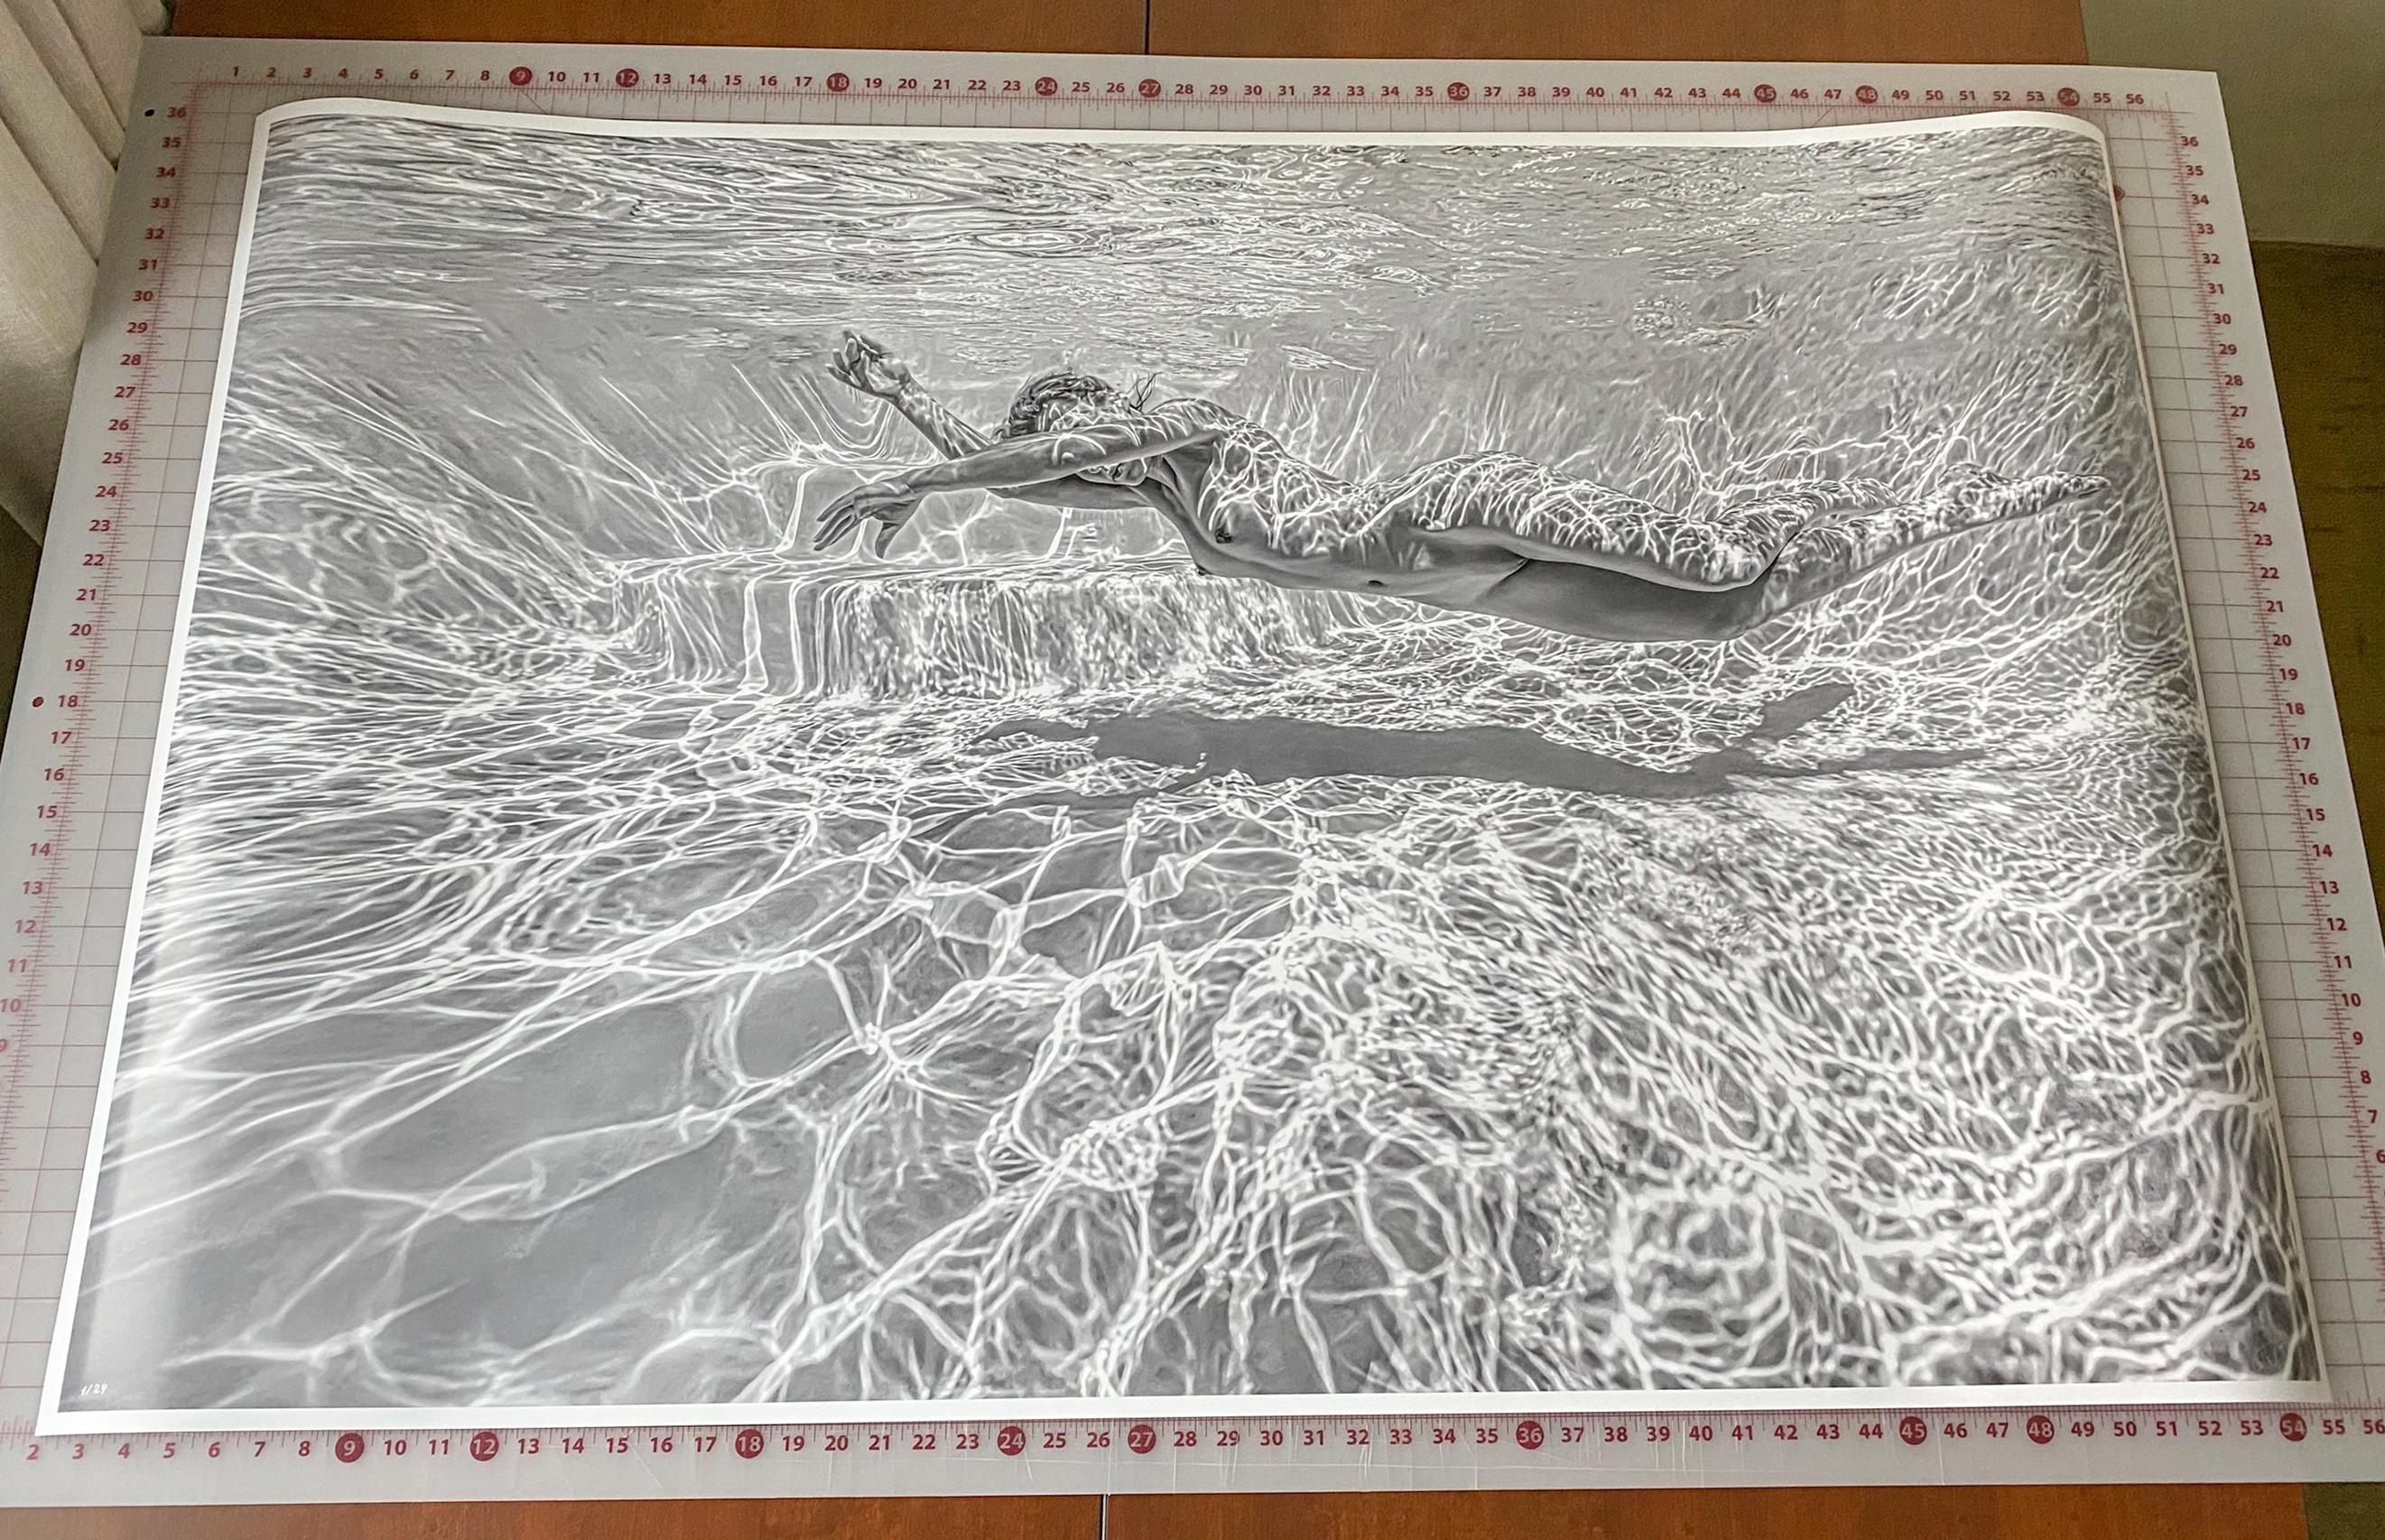 Thunderweb - underwater black & white nude photograph - print on paper 36